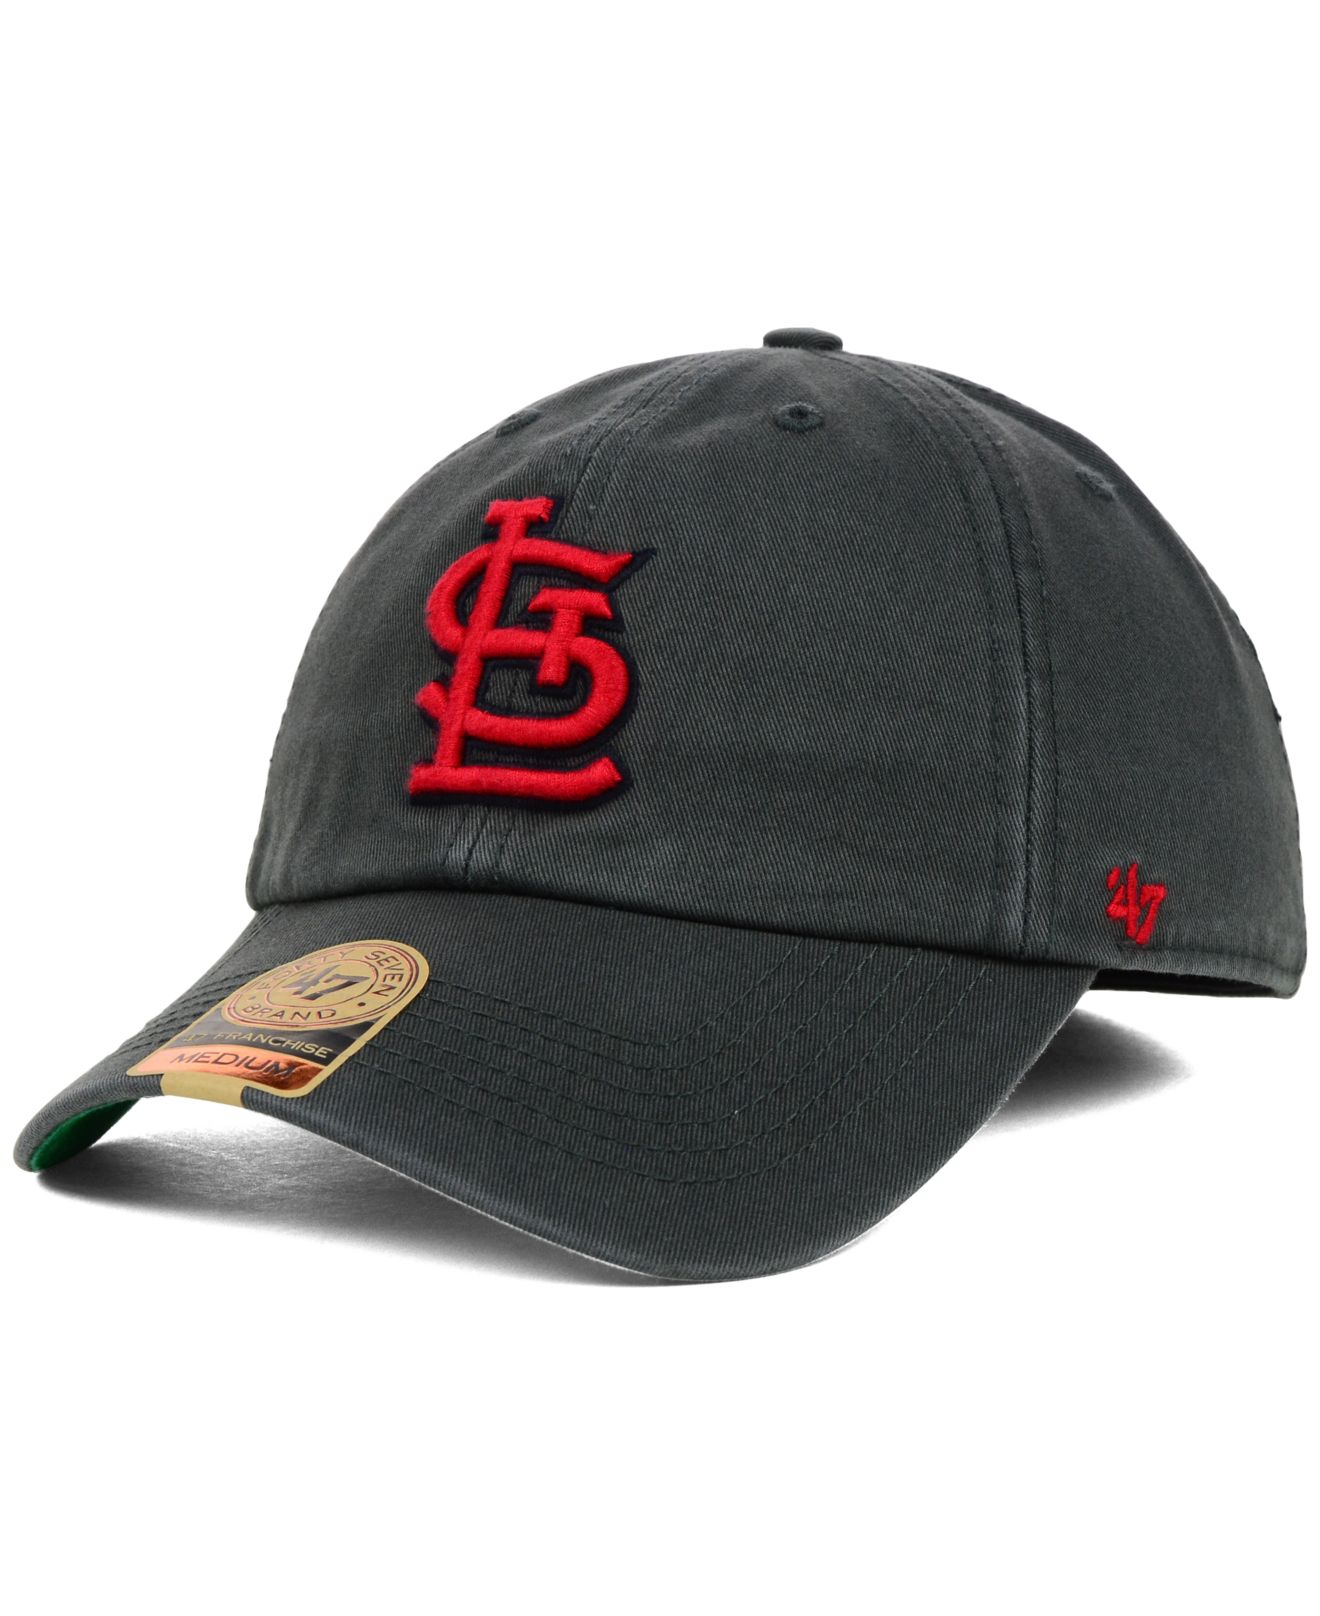 St. Louis Cardinals MLB Sure Shot 47 Mvp Khaki Adjustable - 47 Brand cap